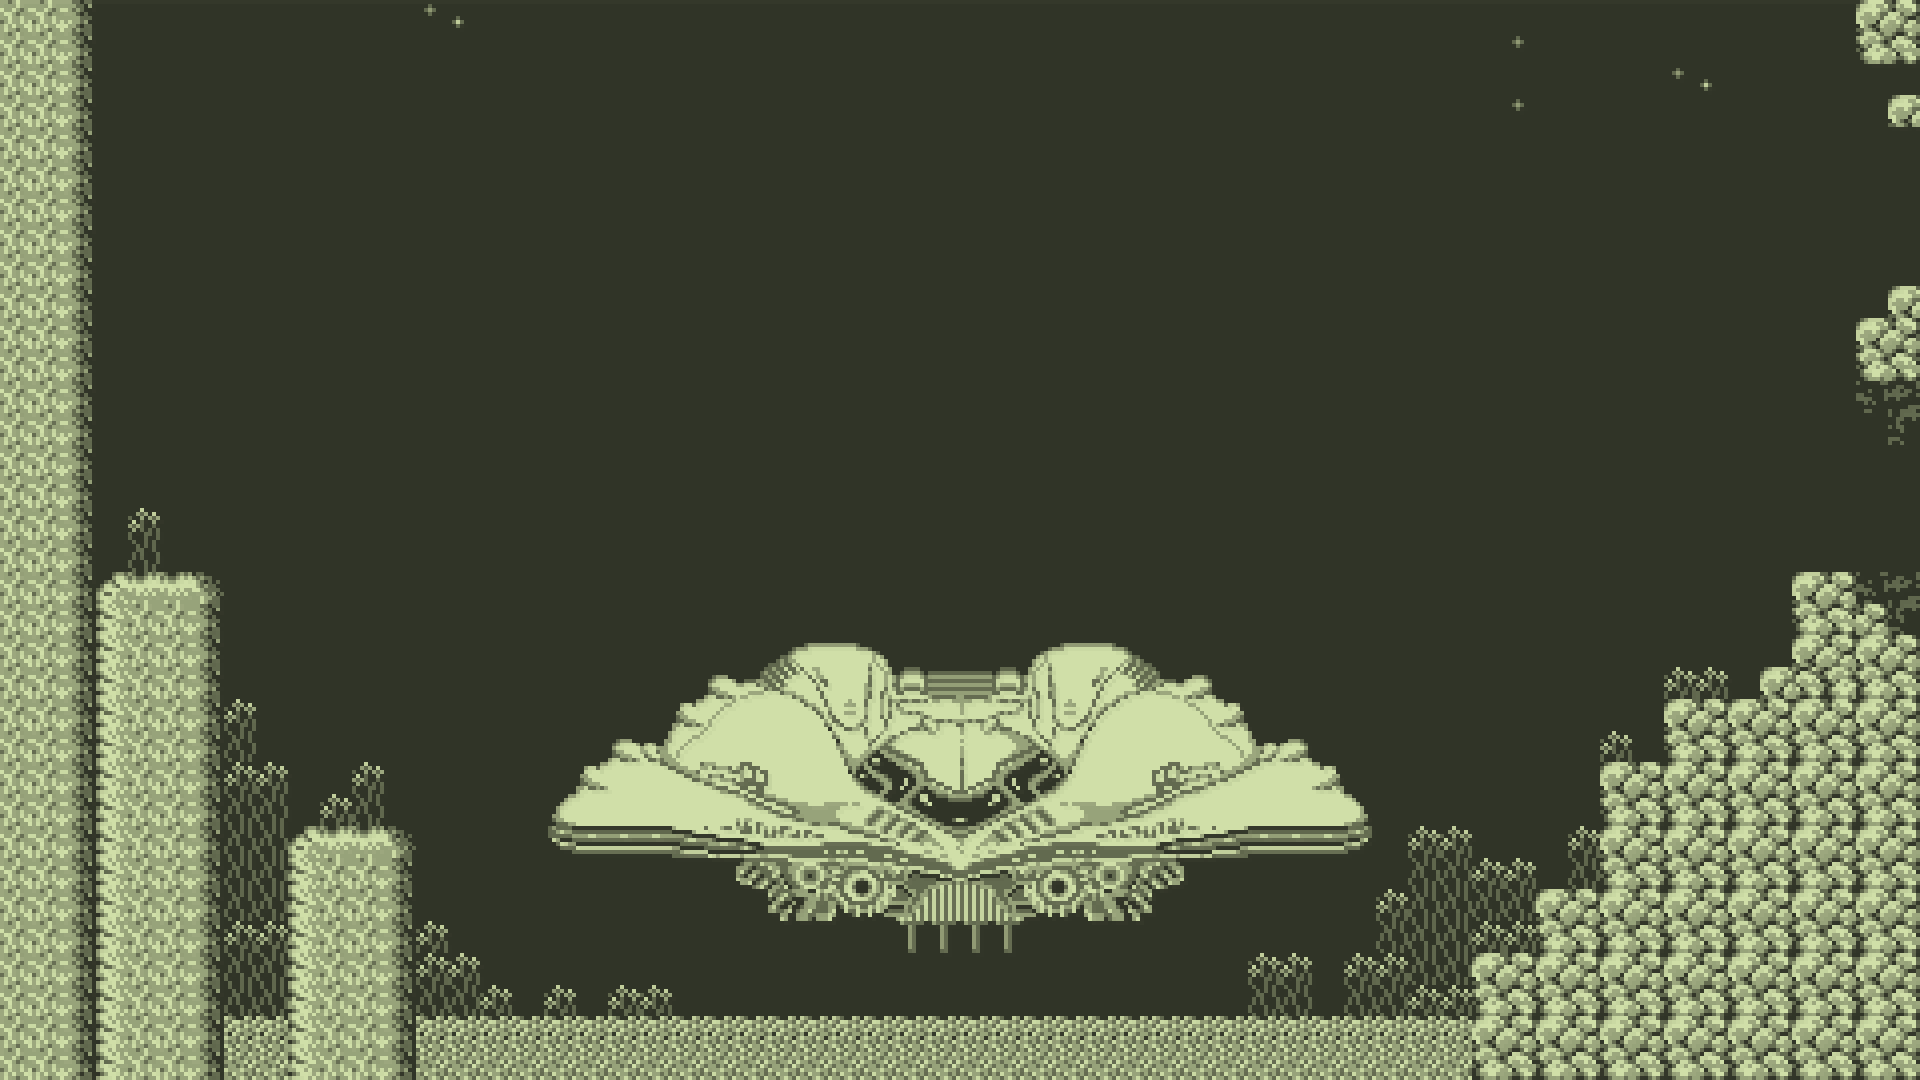 Video Games Spaceship Alien Planet Metroid GameBoy Retro Games Nintendo Monochrome Pixel Art Pixelat 1920x1080